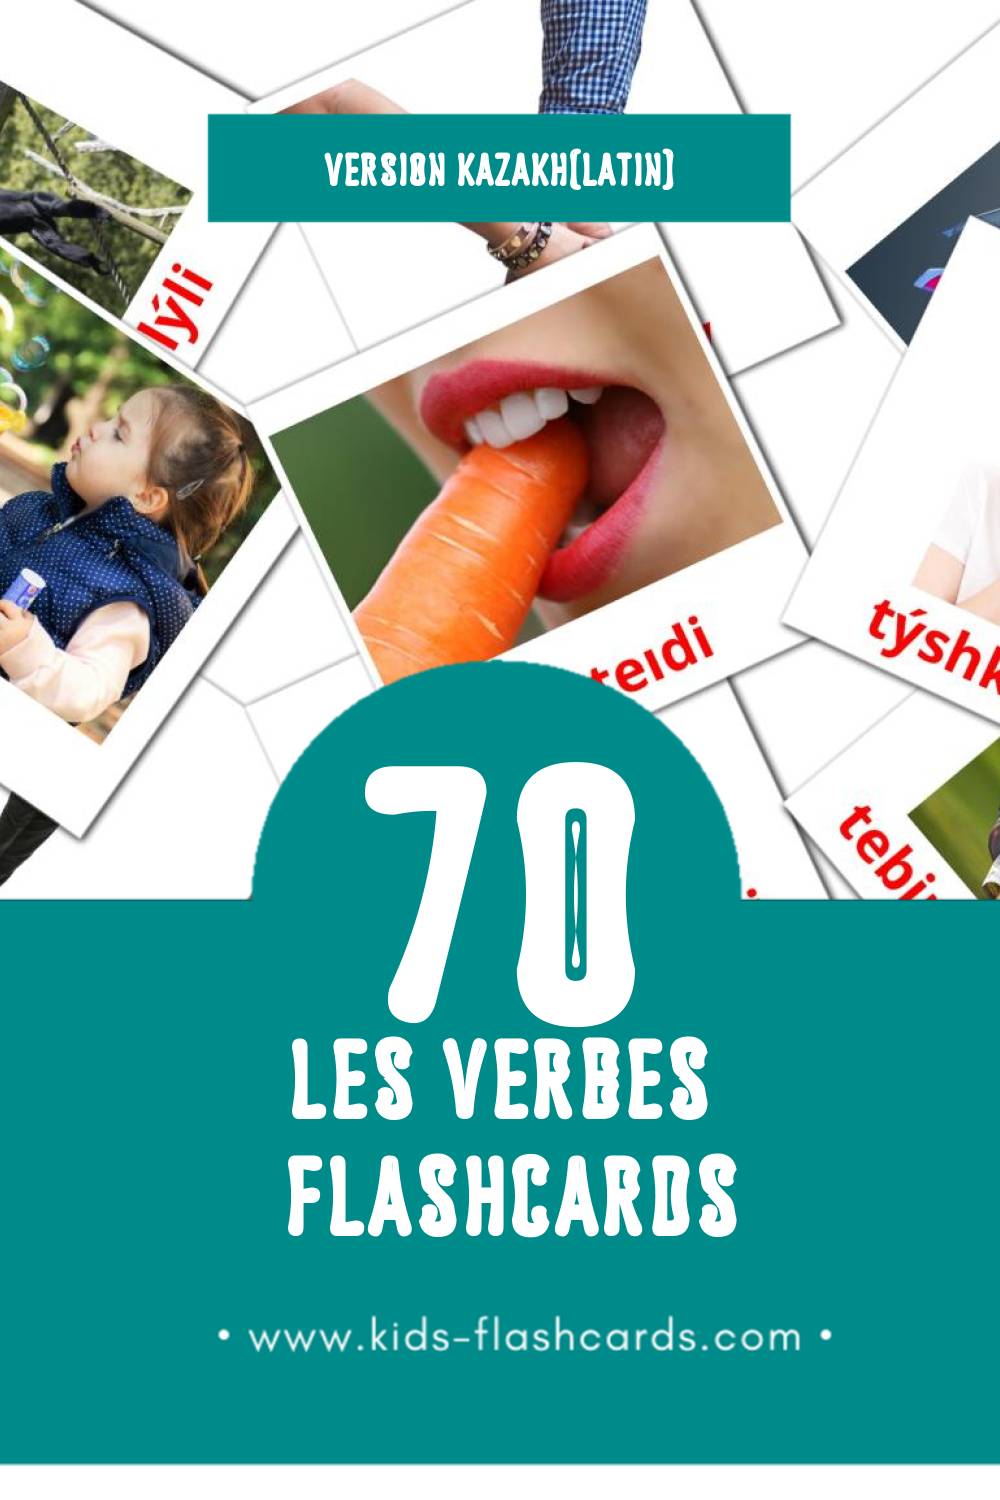 Flashcards Visual күнделікті іс-қимылдар pour les tout-petits (76 cartes en Kazakh(latin))